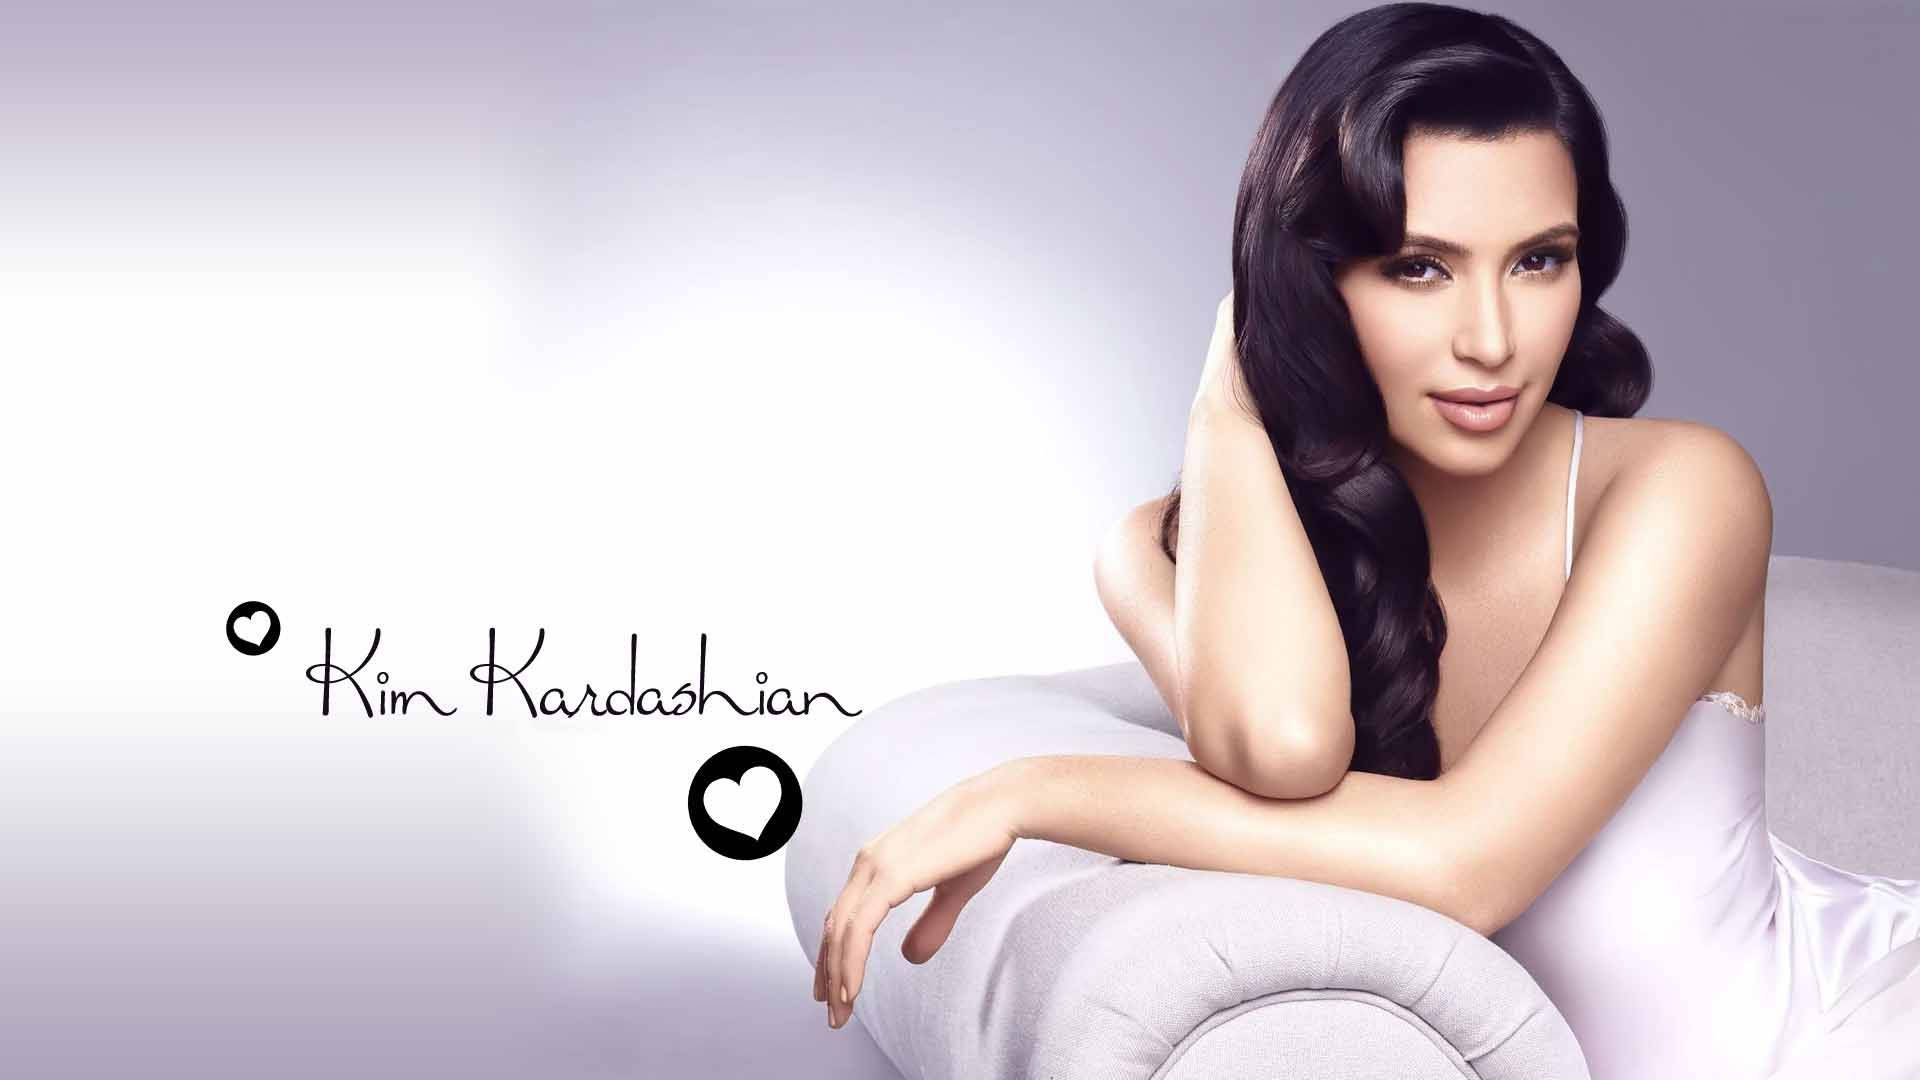 Kim Kardashian 1920X1080 Wallpaper and Background Image